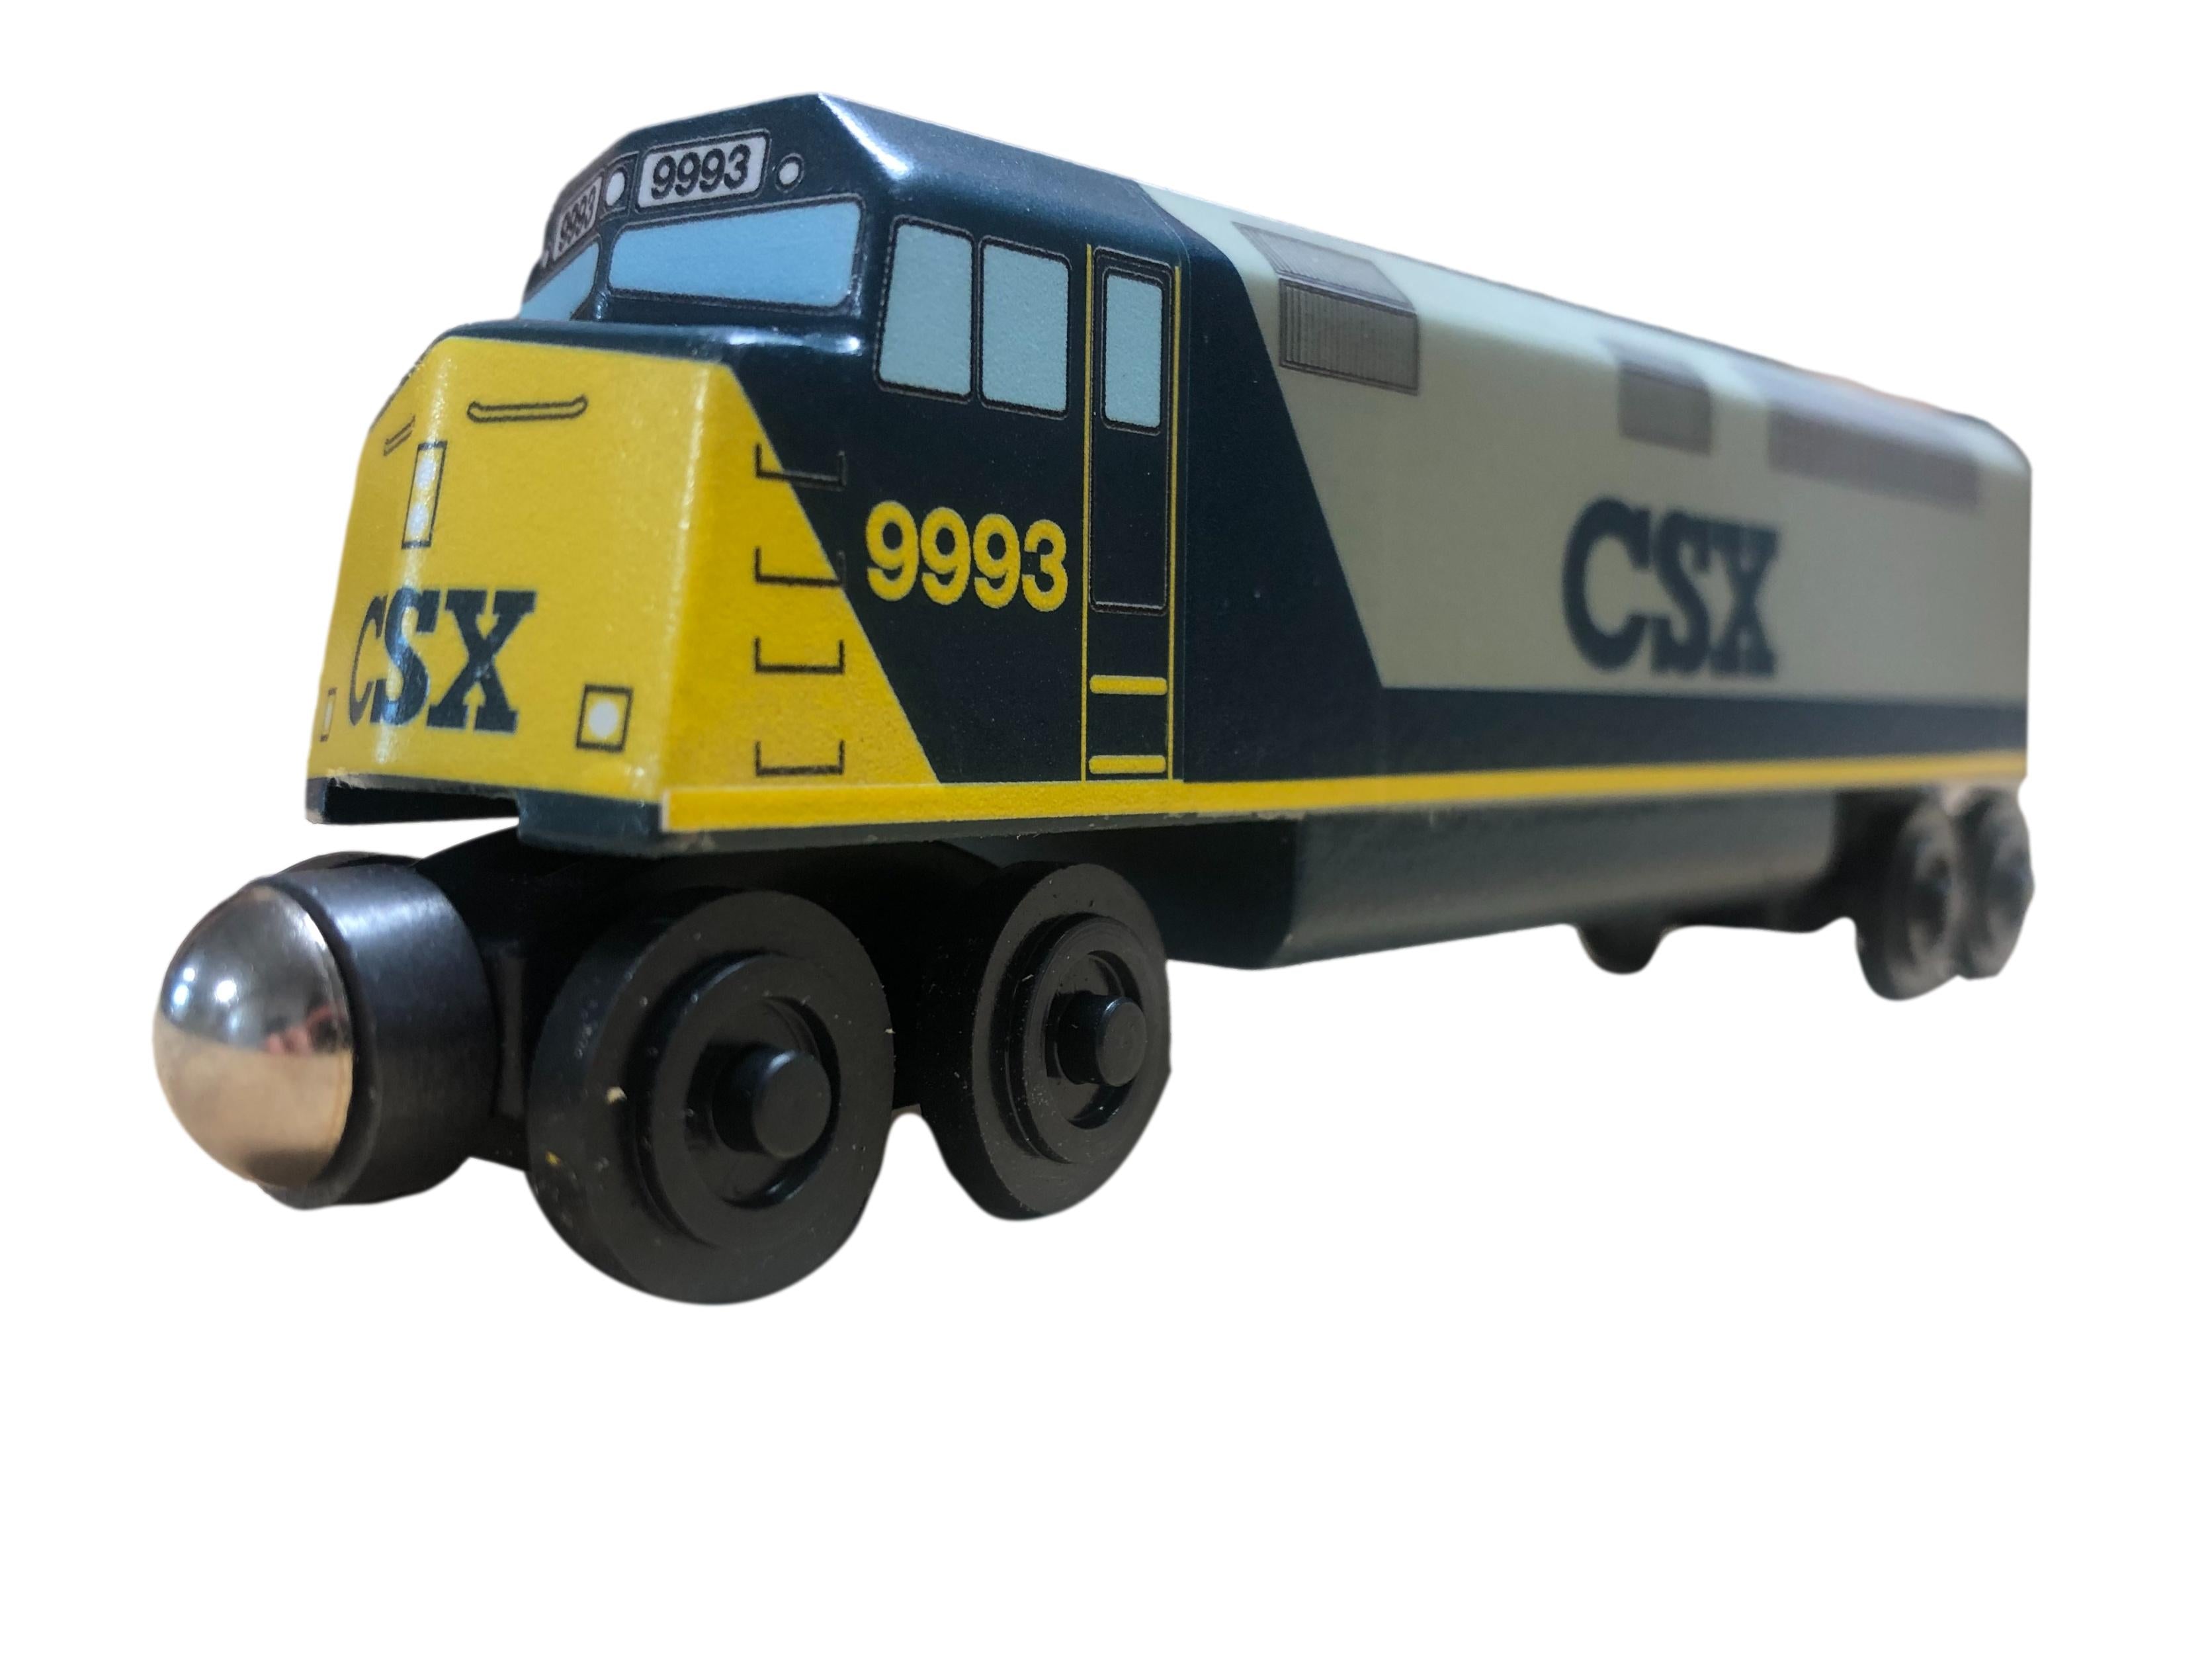 Csx Passenger Car Toy Trains The Whittle Shortline Railroad Wooden Toy Trains